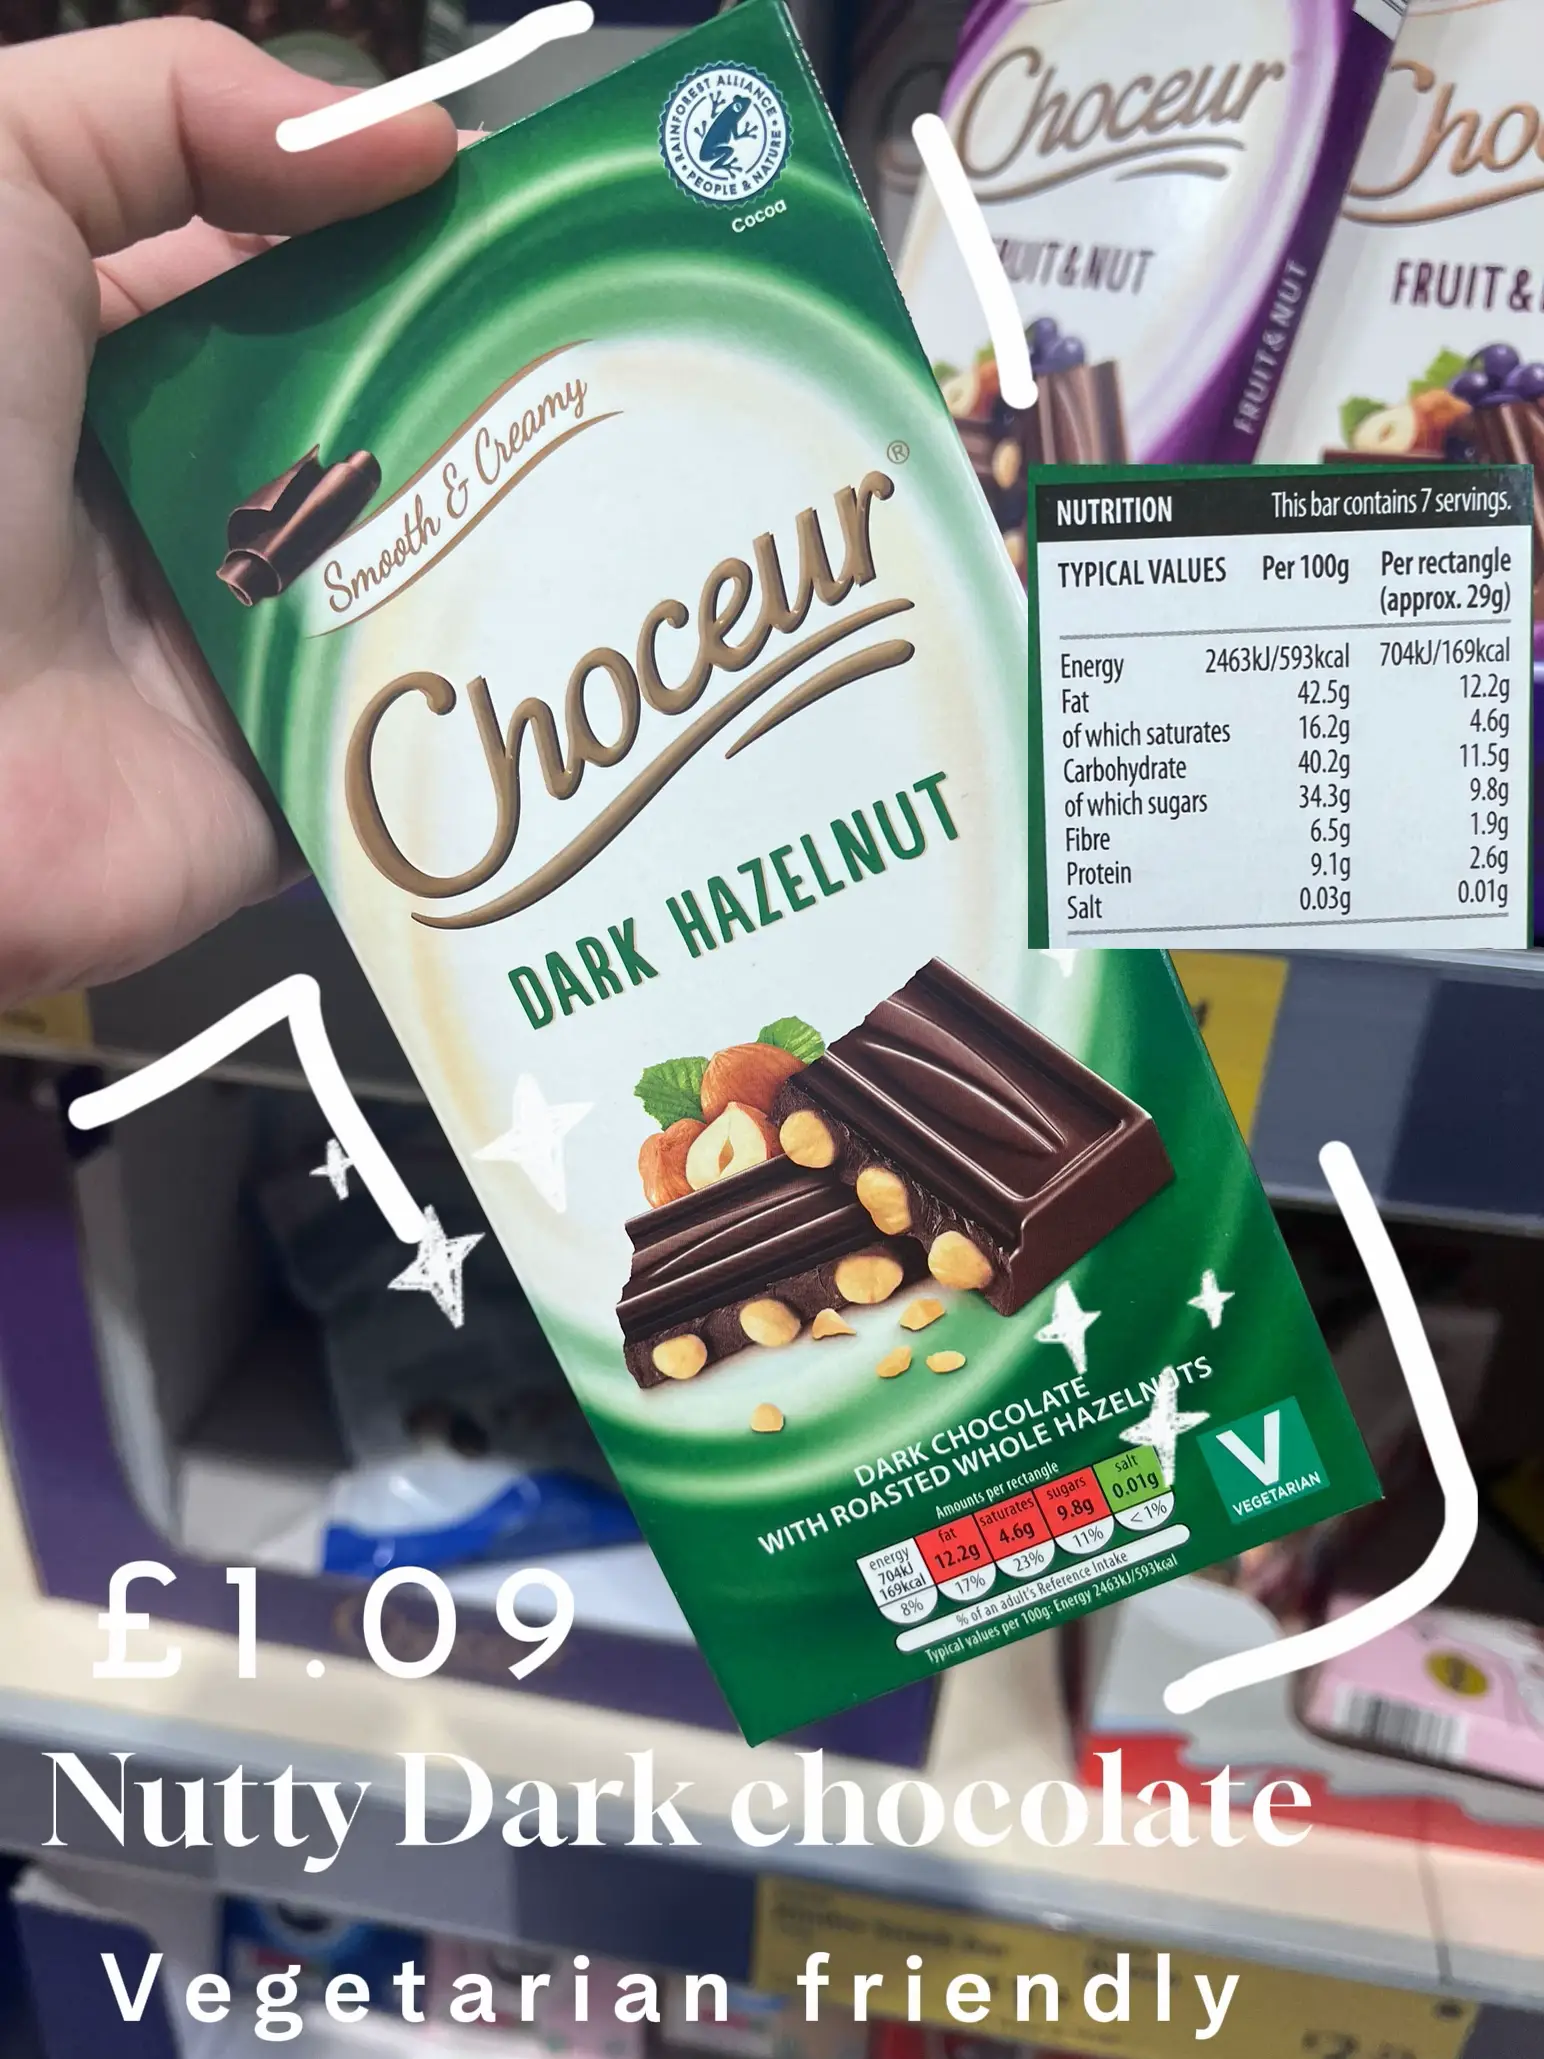 Mars Galaxy Creamy Milk Chocolate Bar - 1.48oz (42g)